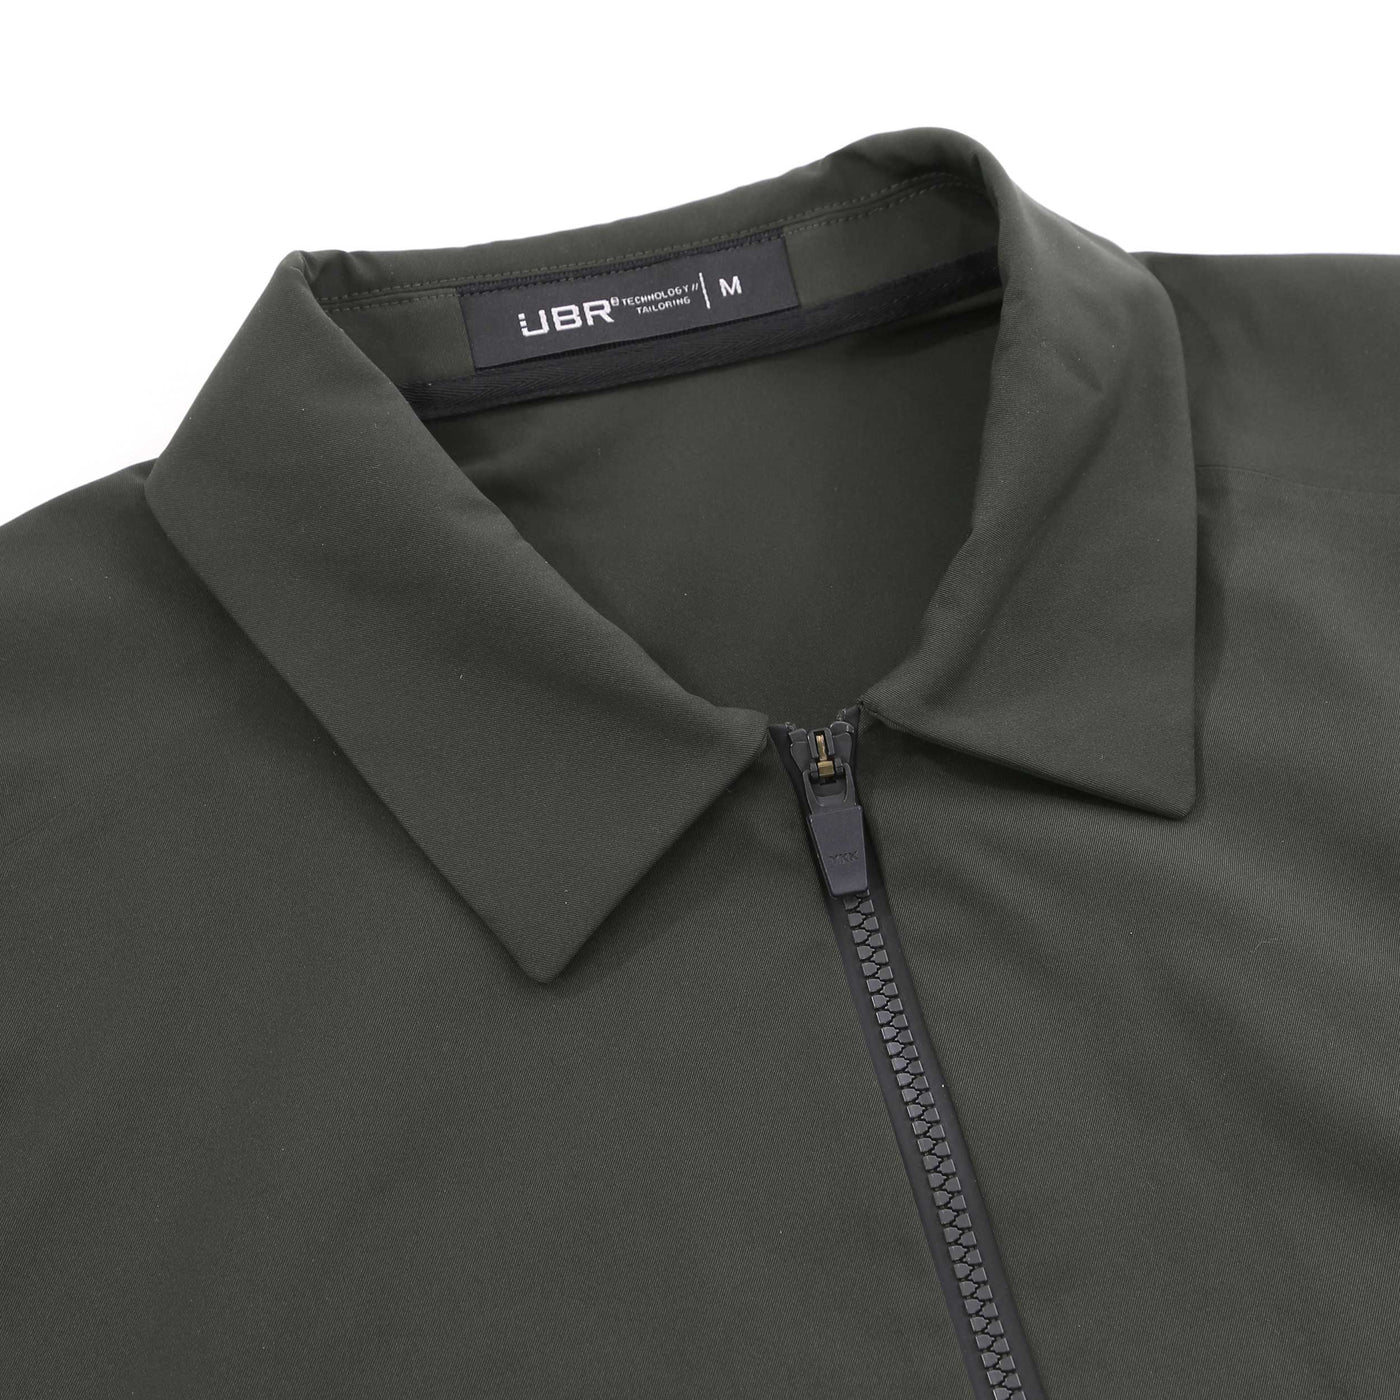 UBR Nano Jacket in Olive Collar